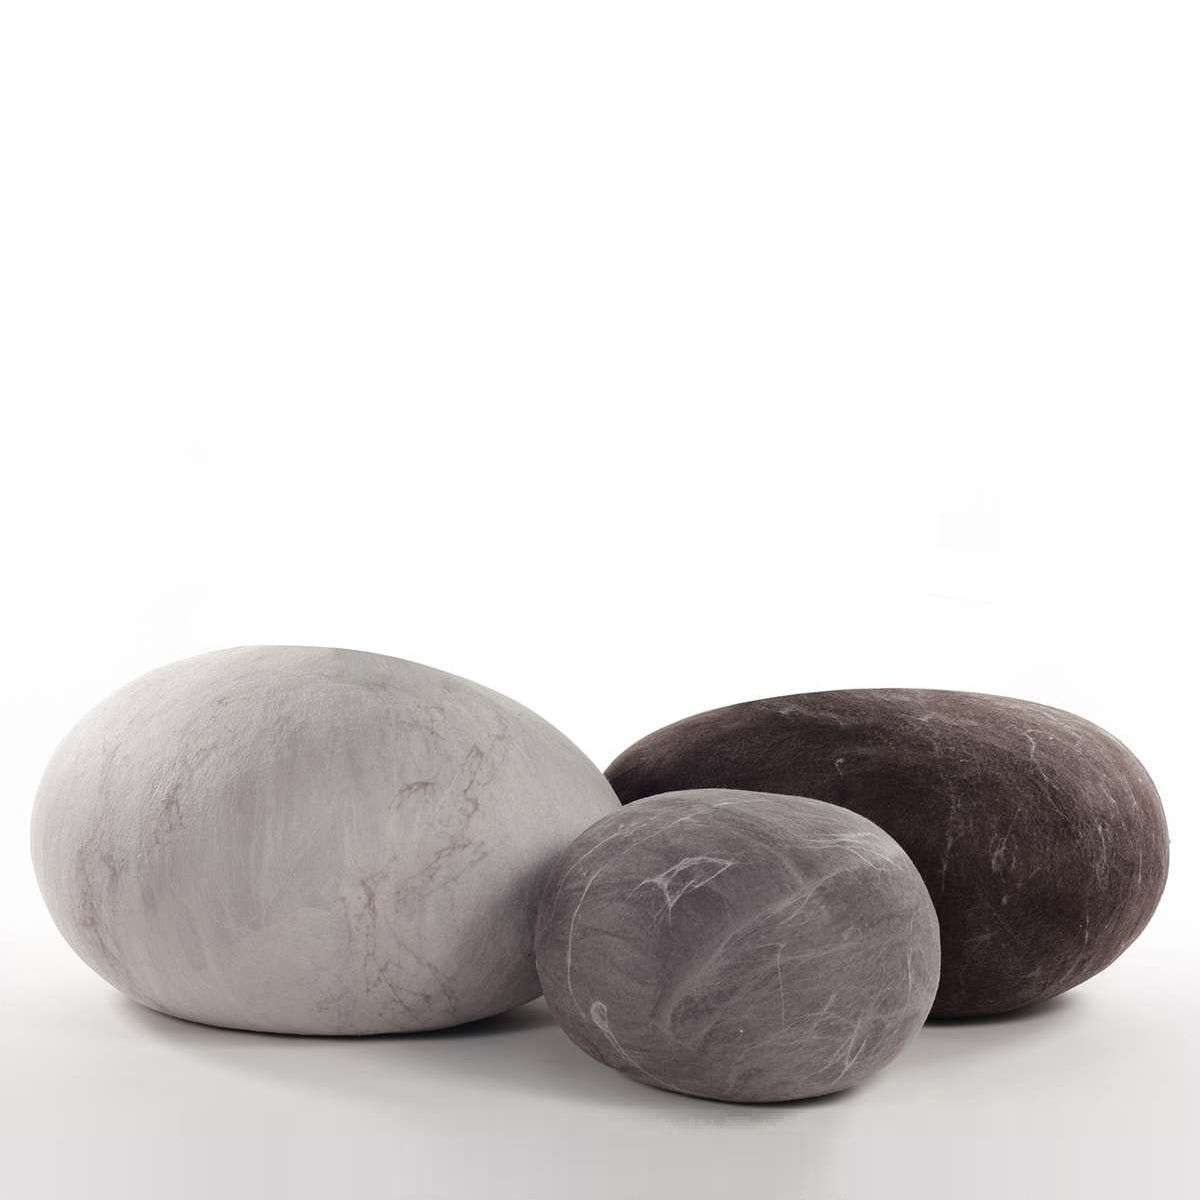 Pebbles and Rocks